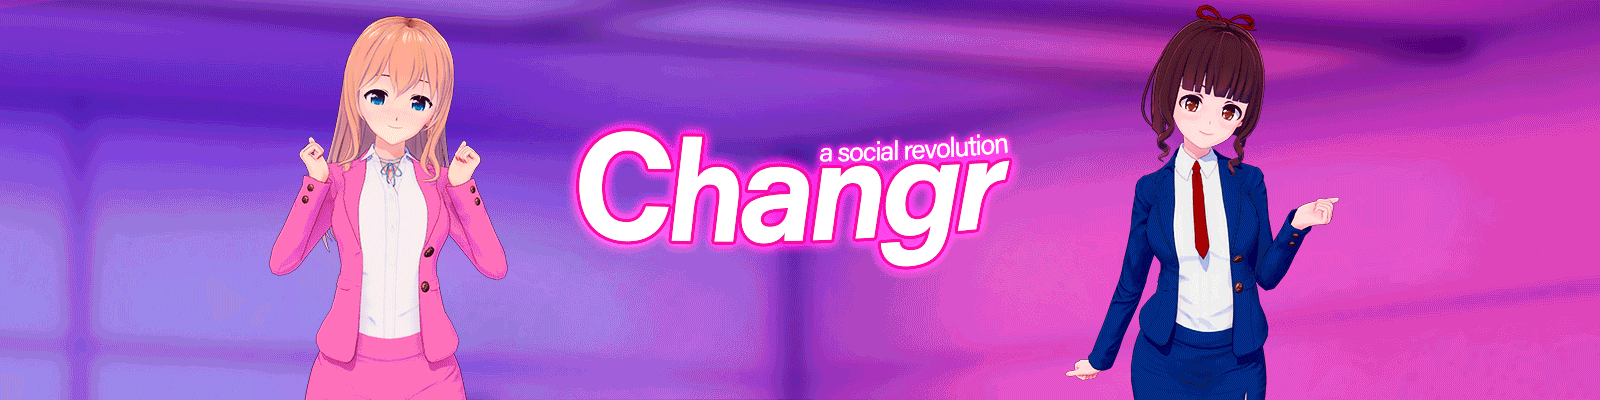 Changr: a social revolution poster